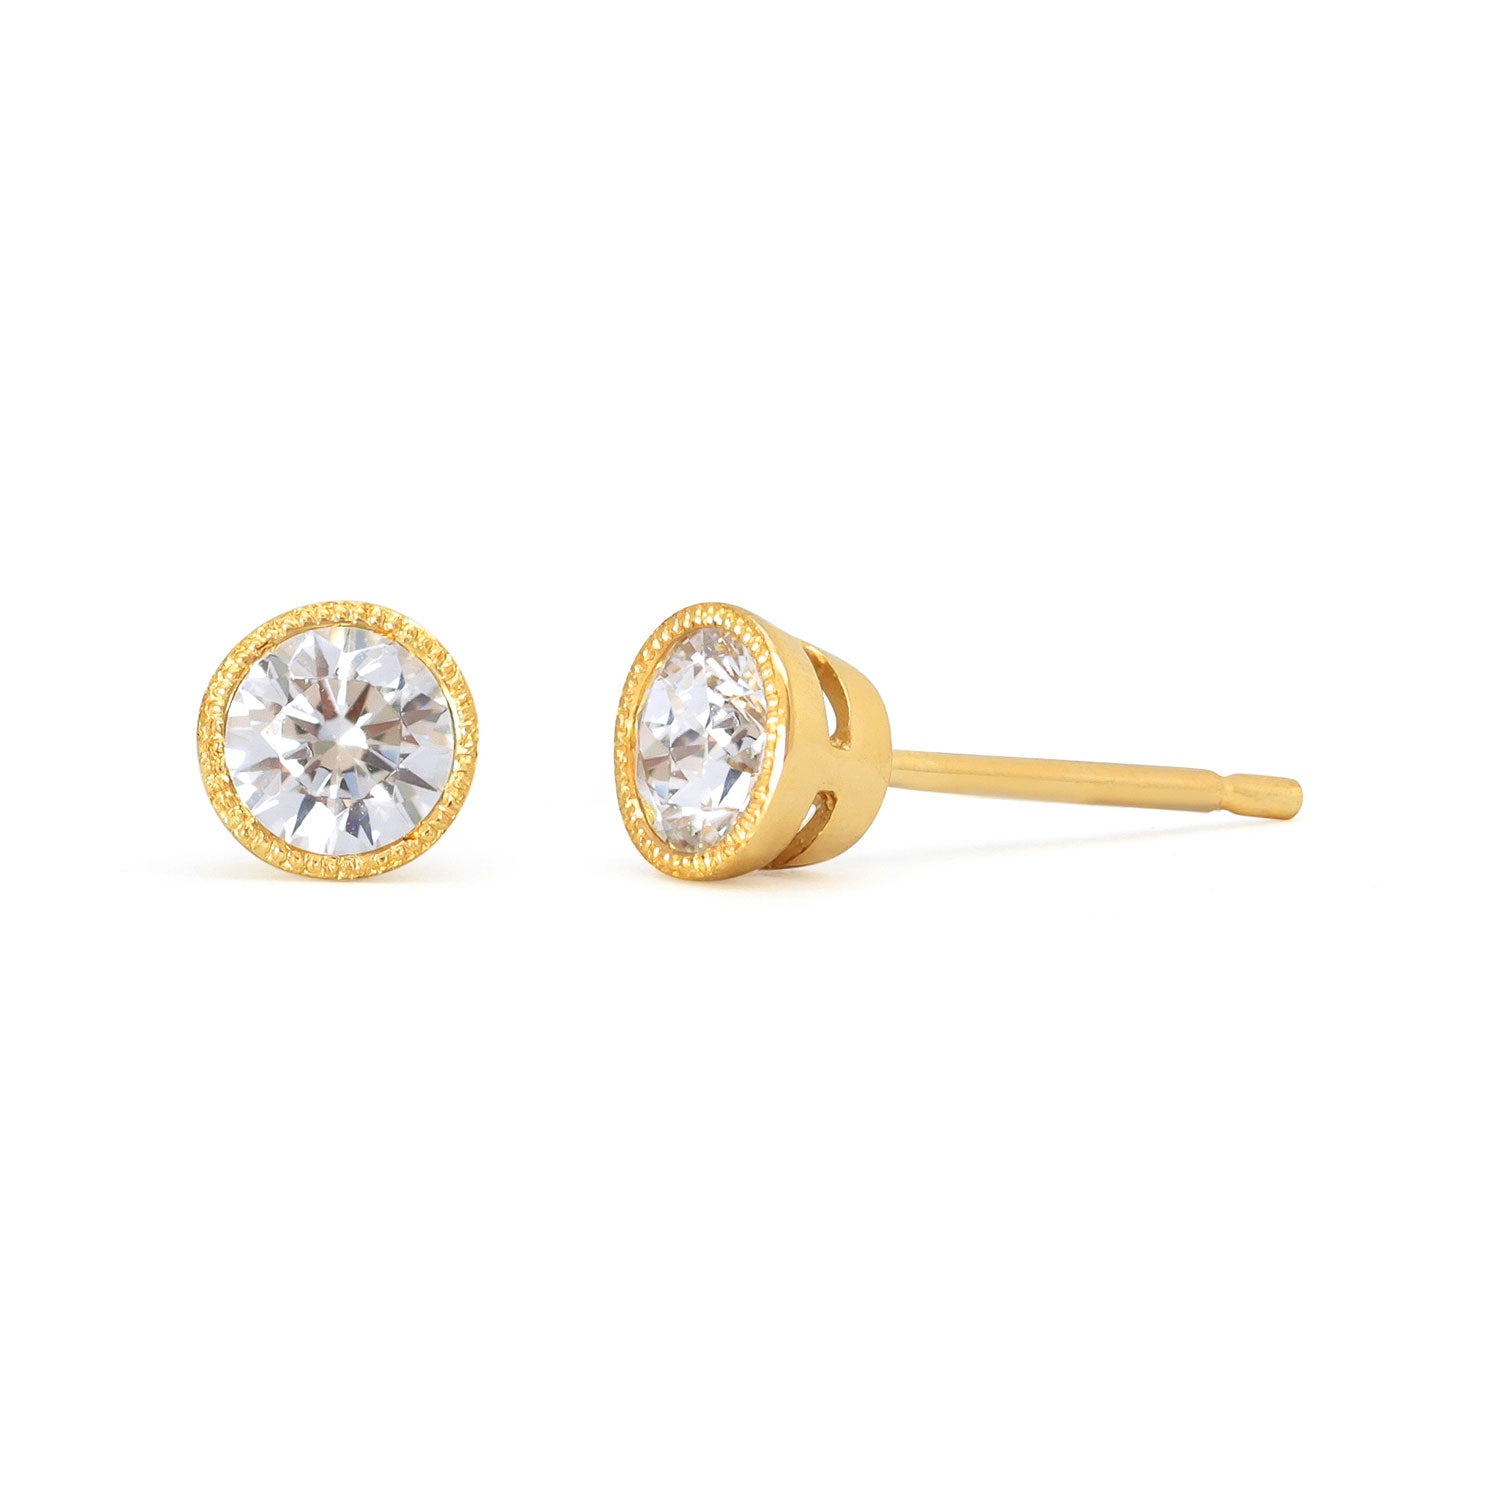 Lebrusan Studio rub-over stud earrings with milgrain beading - 18ct yellow Fairtrade Gold and 0.5ct of recycled diamonds